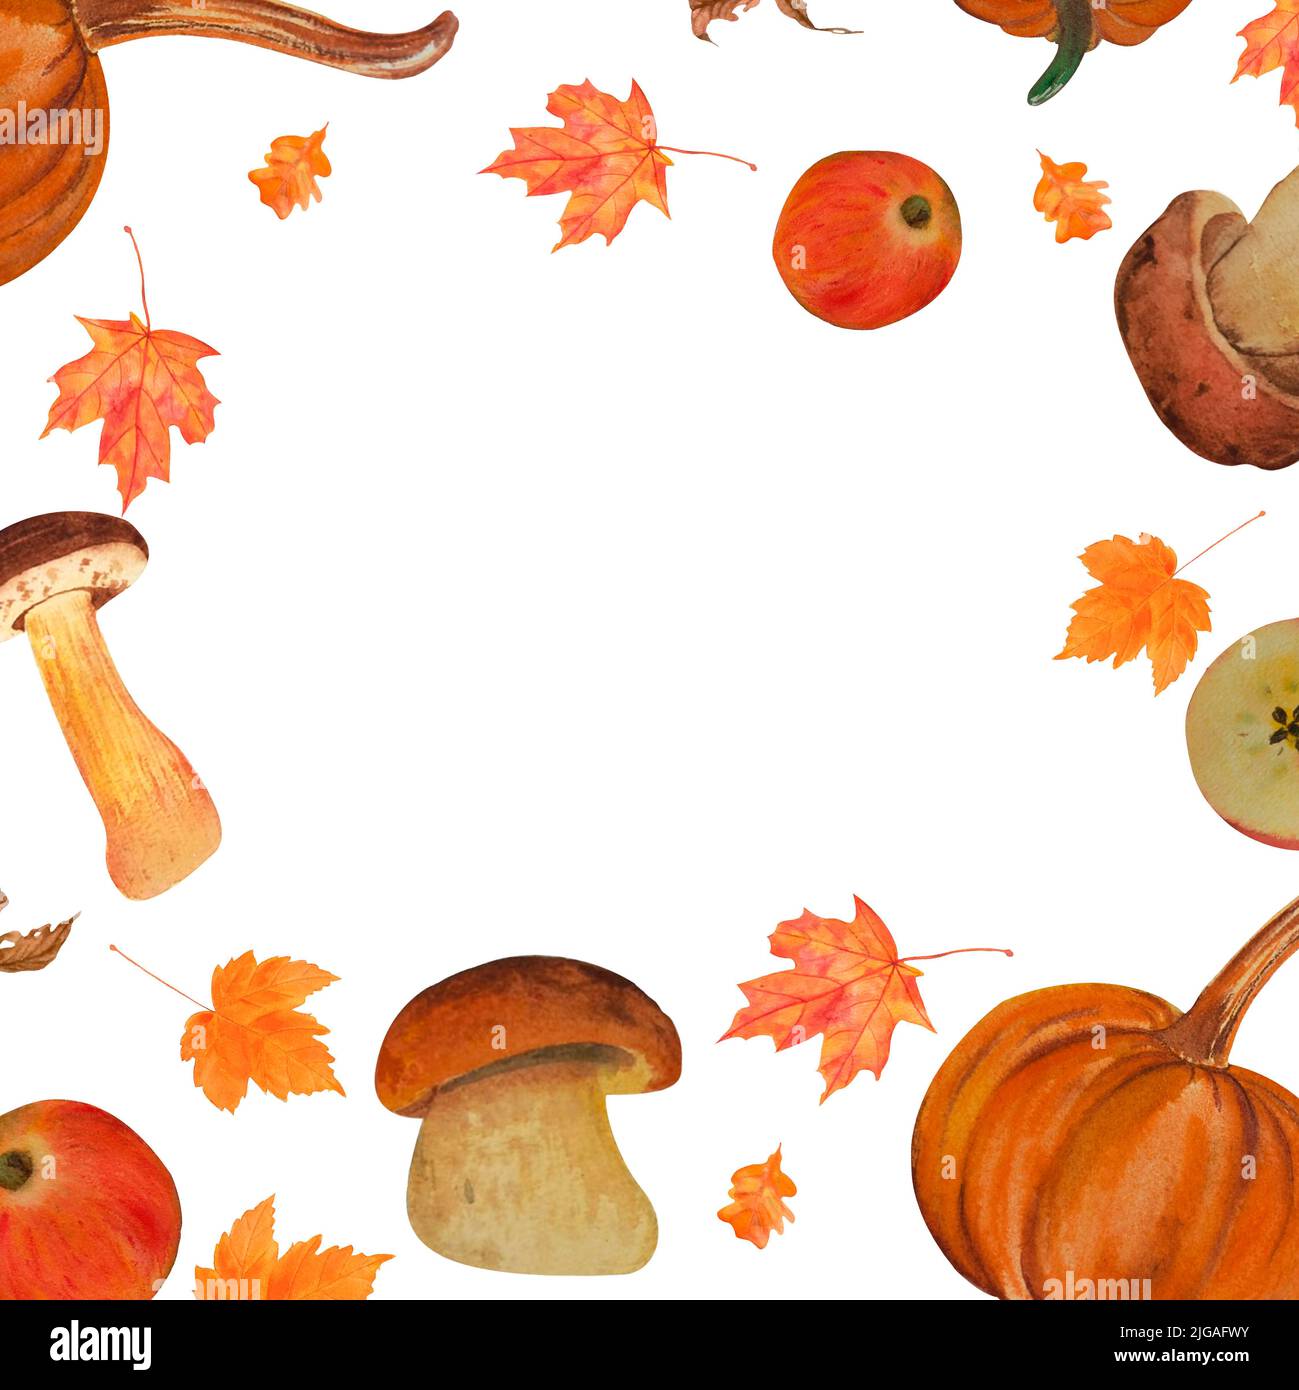 seamless watercolor pattern of illustrations of mushrooms, juicy ripe red apple, orange pumpkin, maple leaf. On white background. autumn illustration, Stock Photo